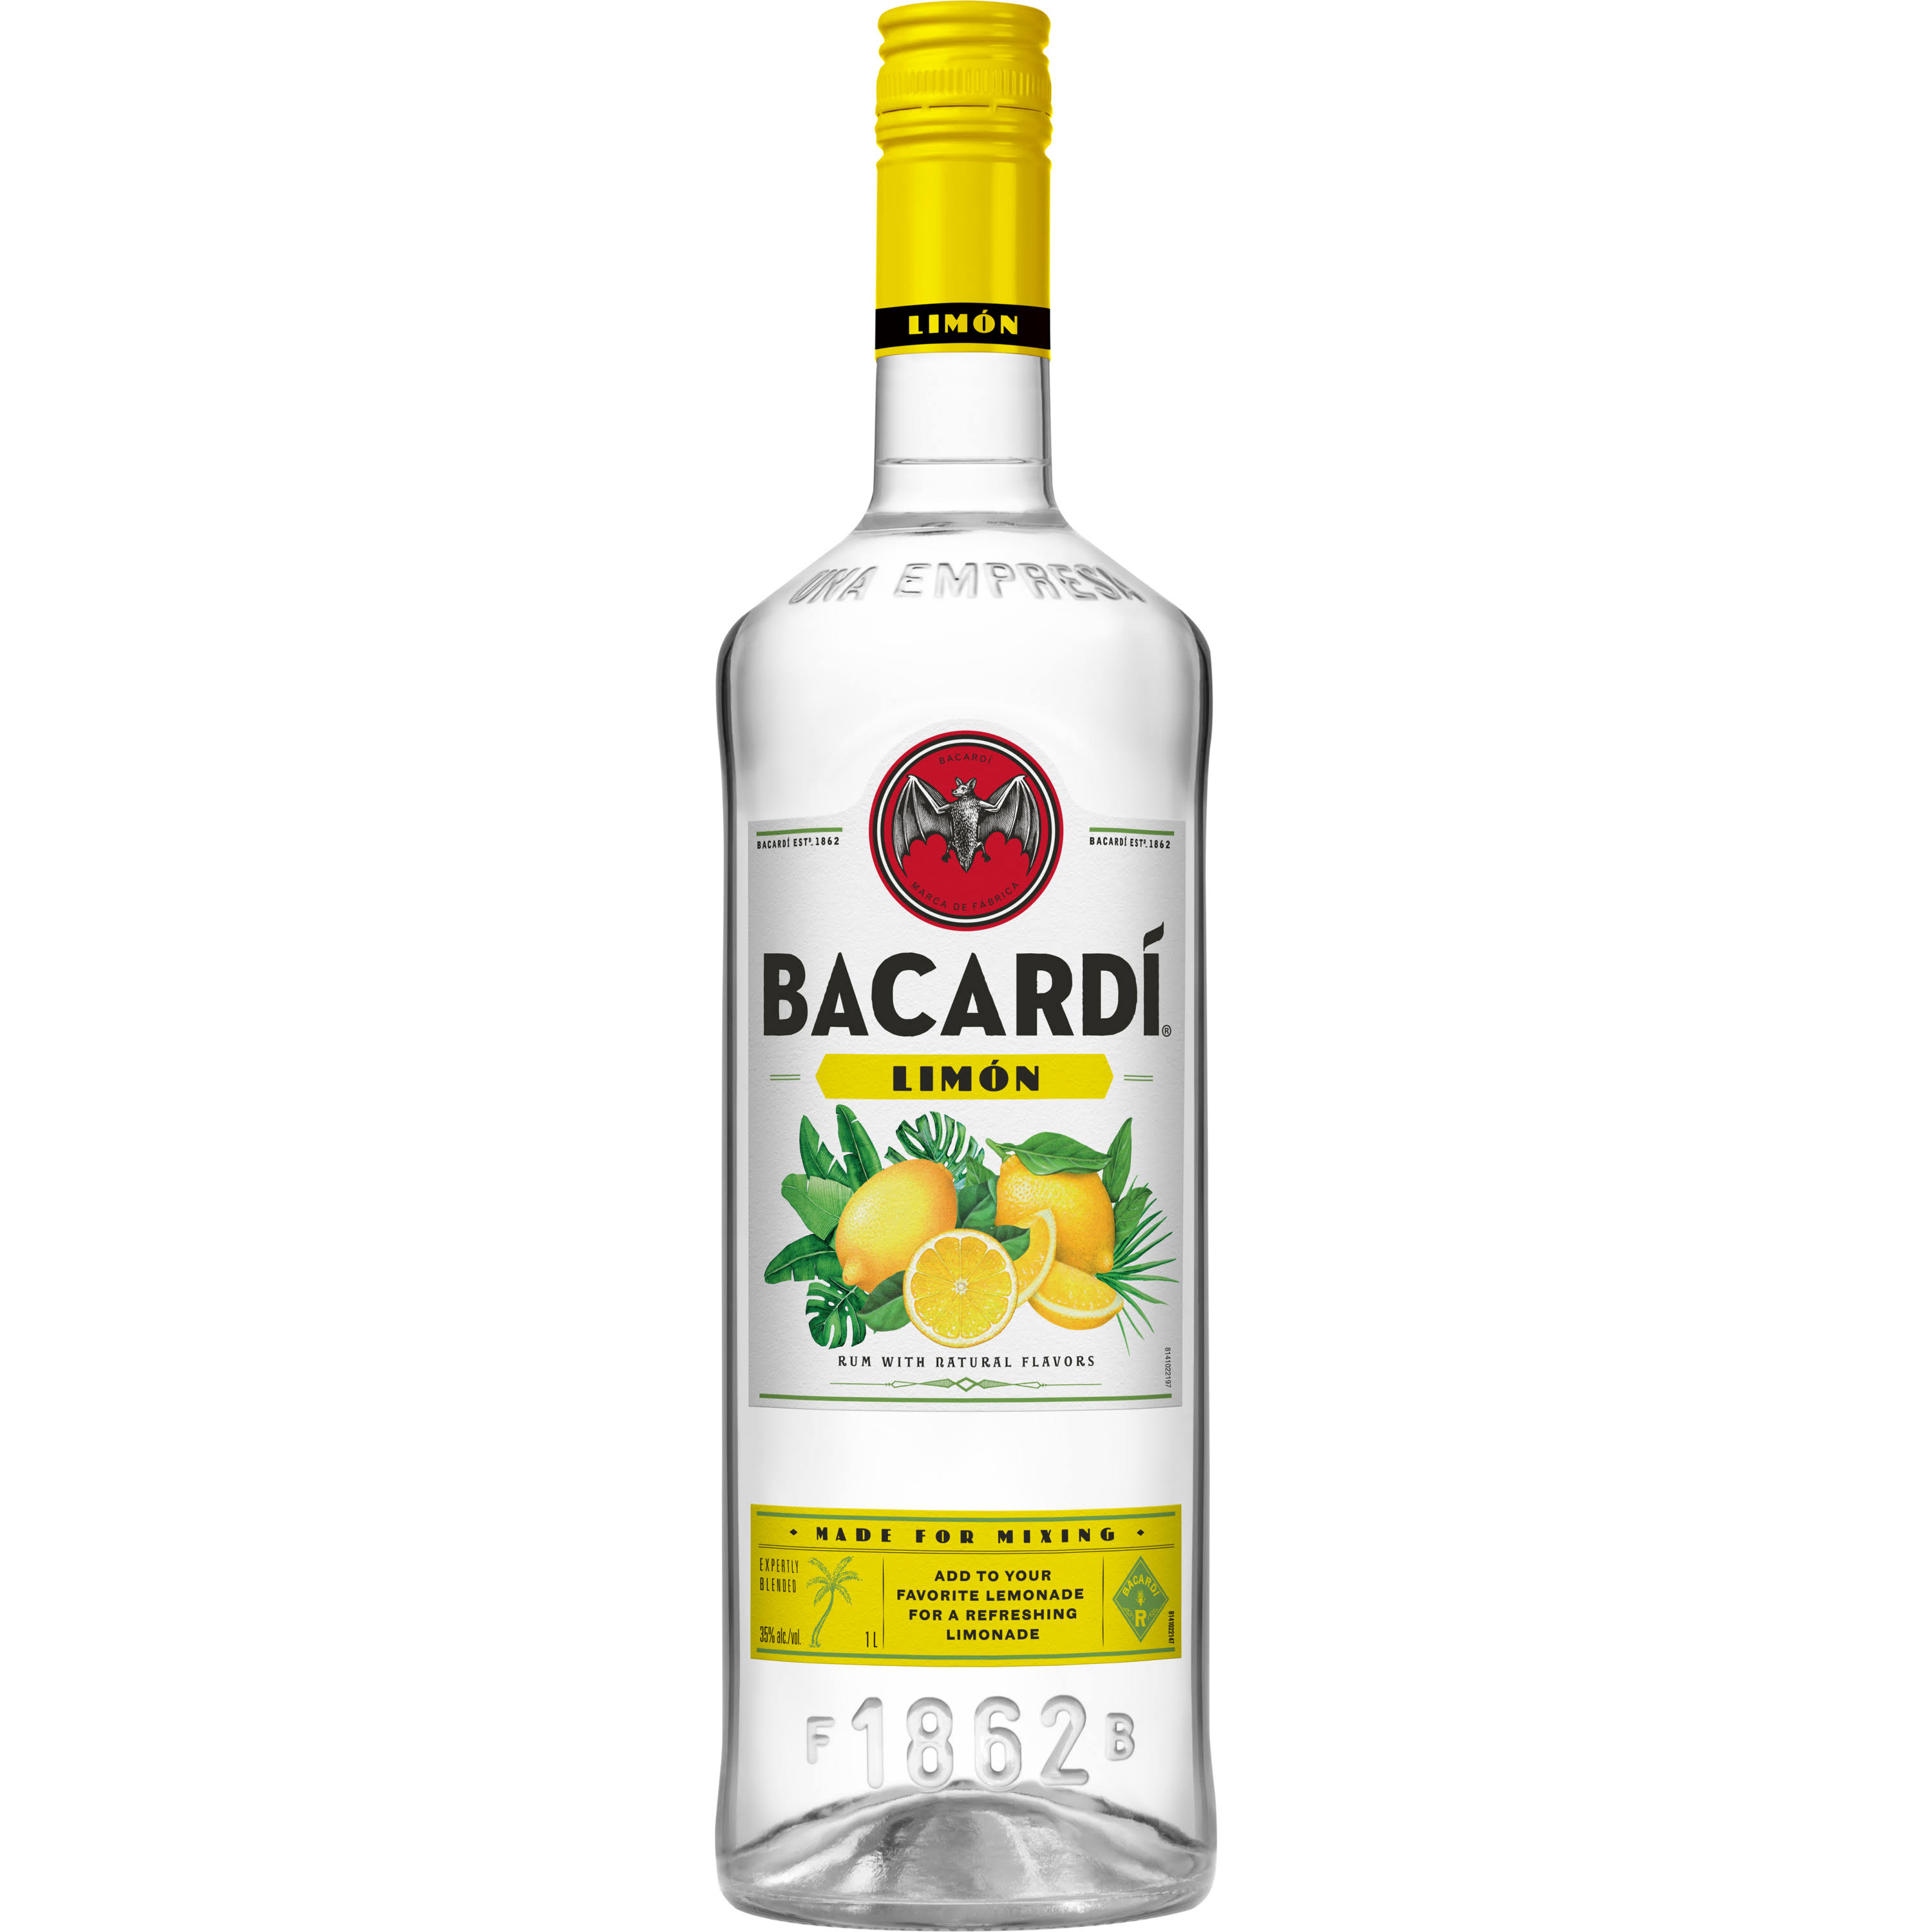 Bacardi Limon Rum - 1000ml